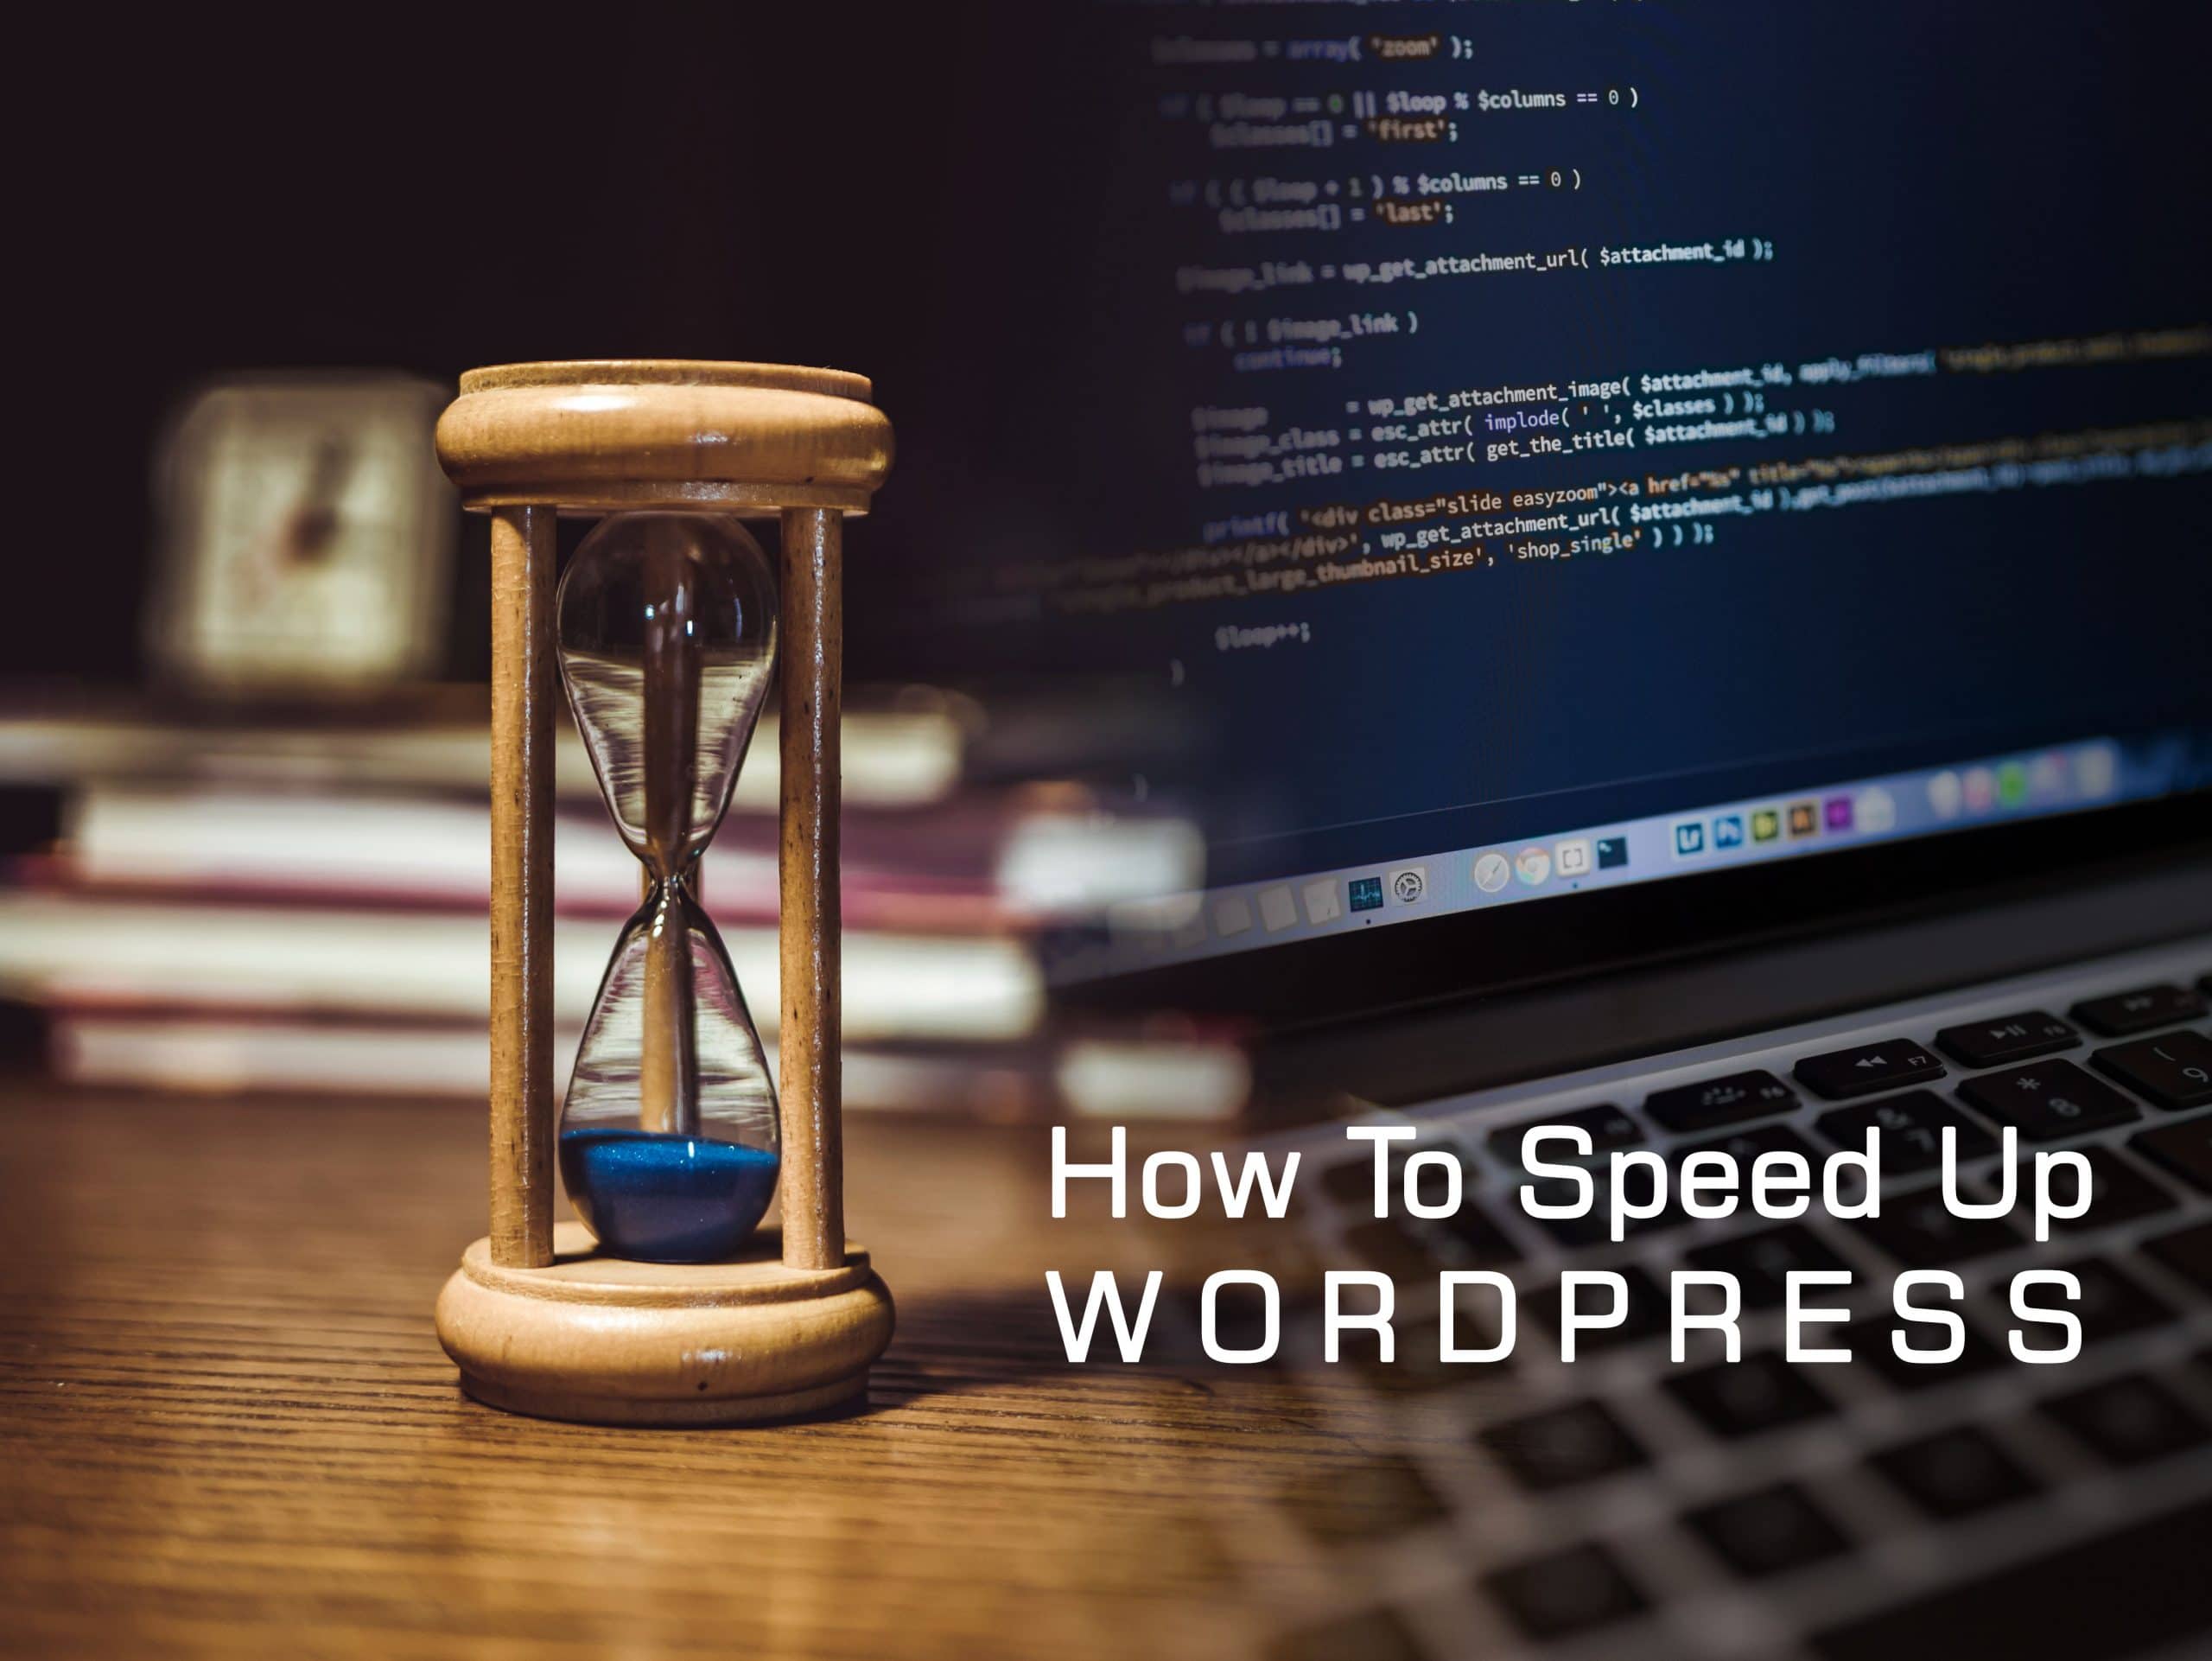 Speed Up WordPress